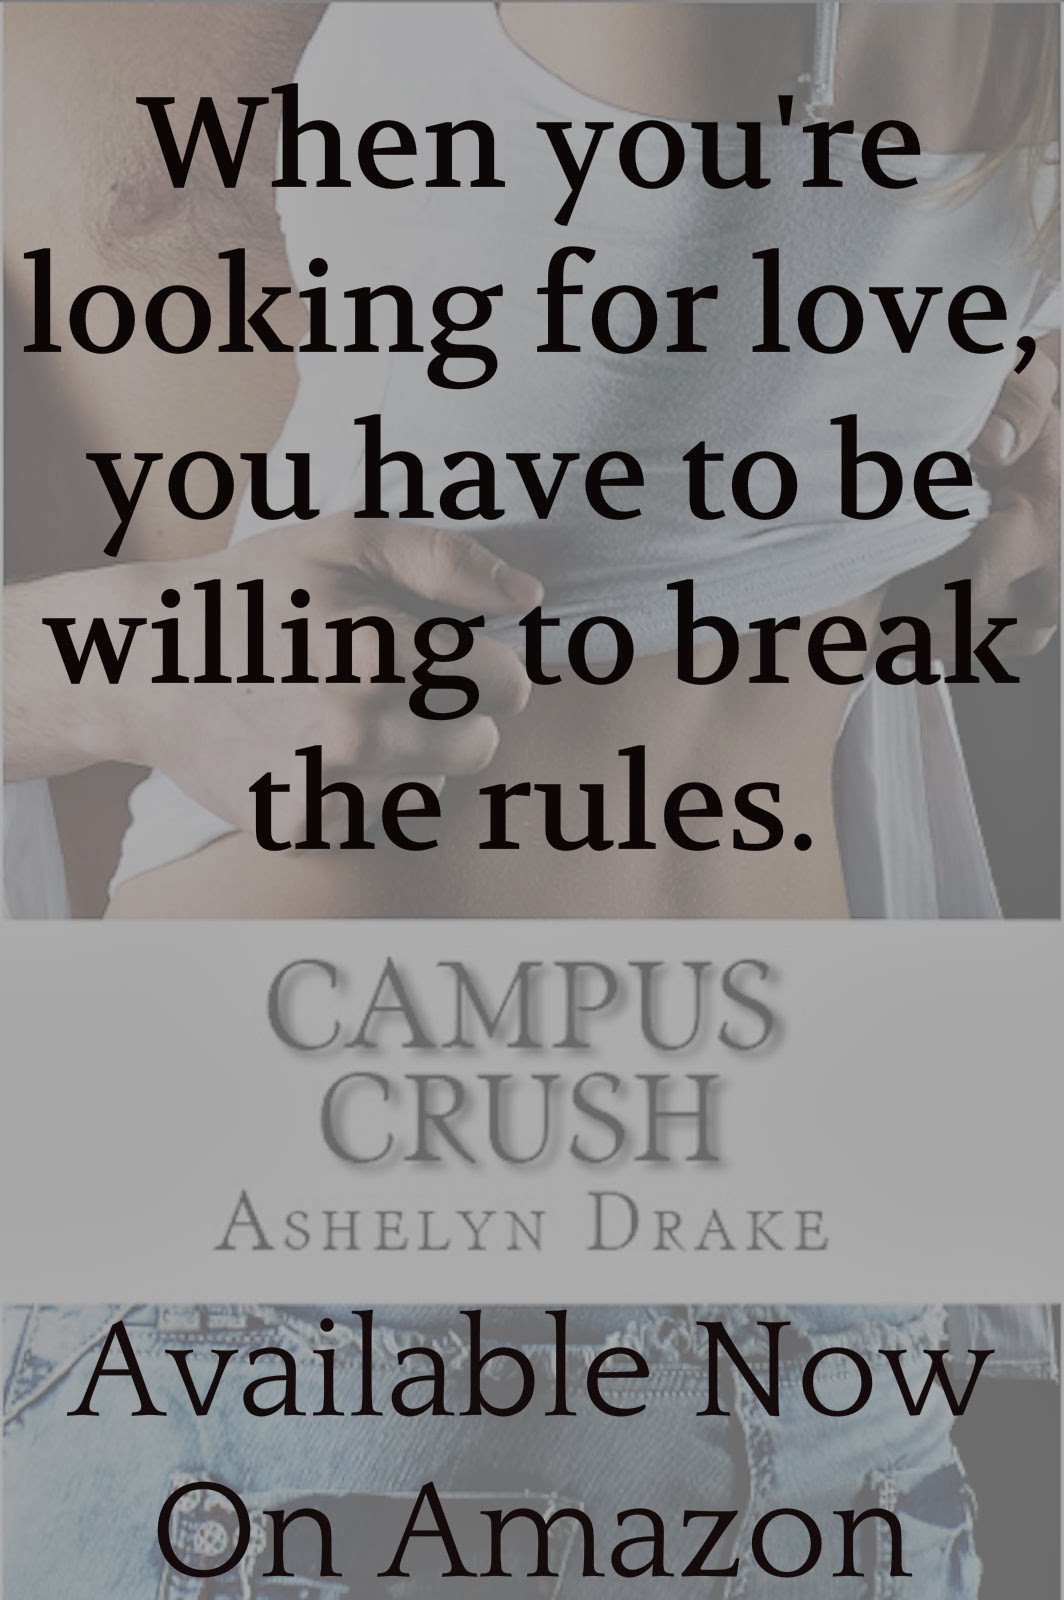 http://www.amazon.com/Campus-Crush-Ashelyn-Drake-ebook/dp/B00IK3NG0A/ref=sr_1_1?ie=UTF8&qid=1393573432&sr=8-1&keywords=campus+crush